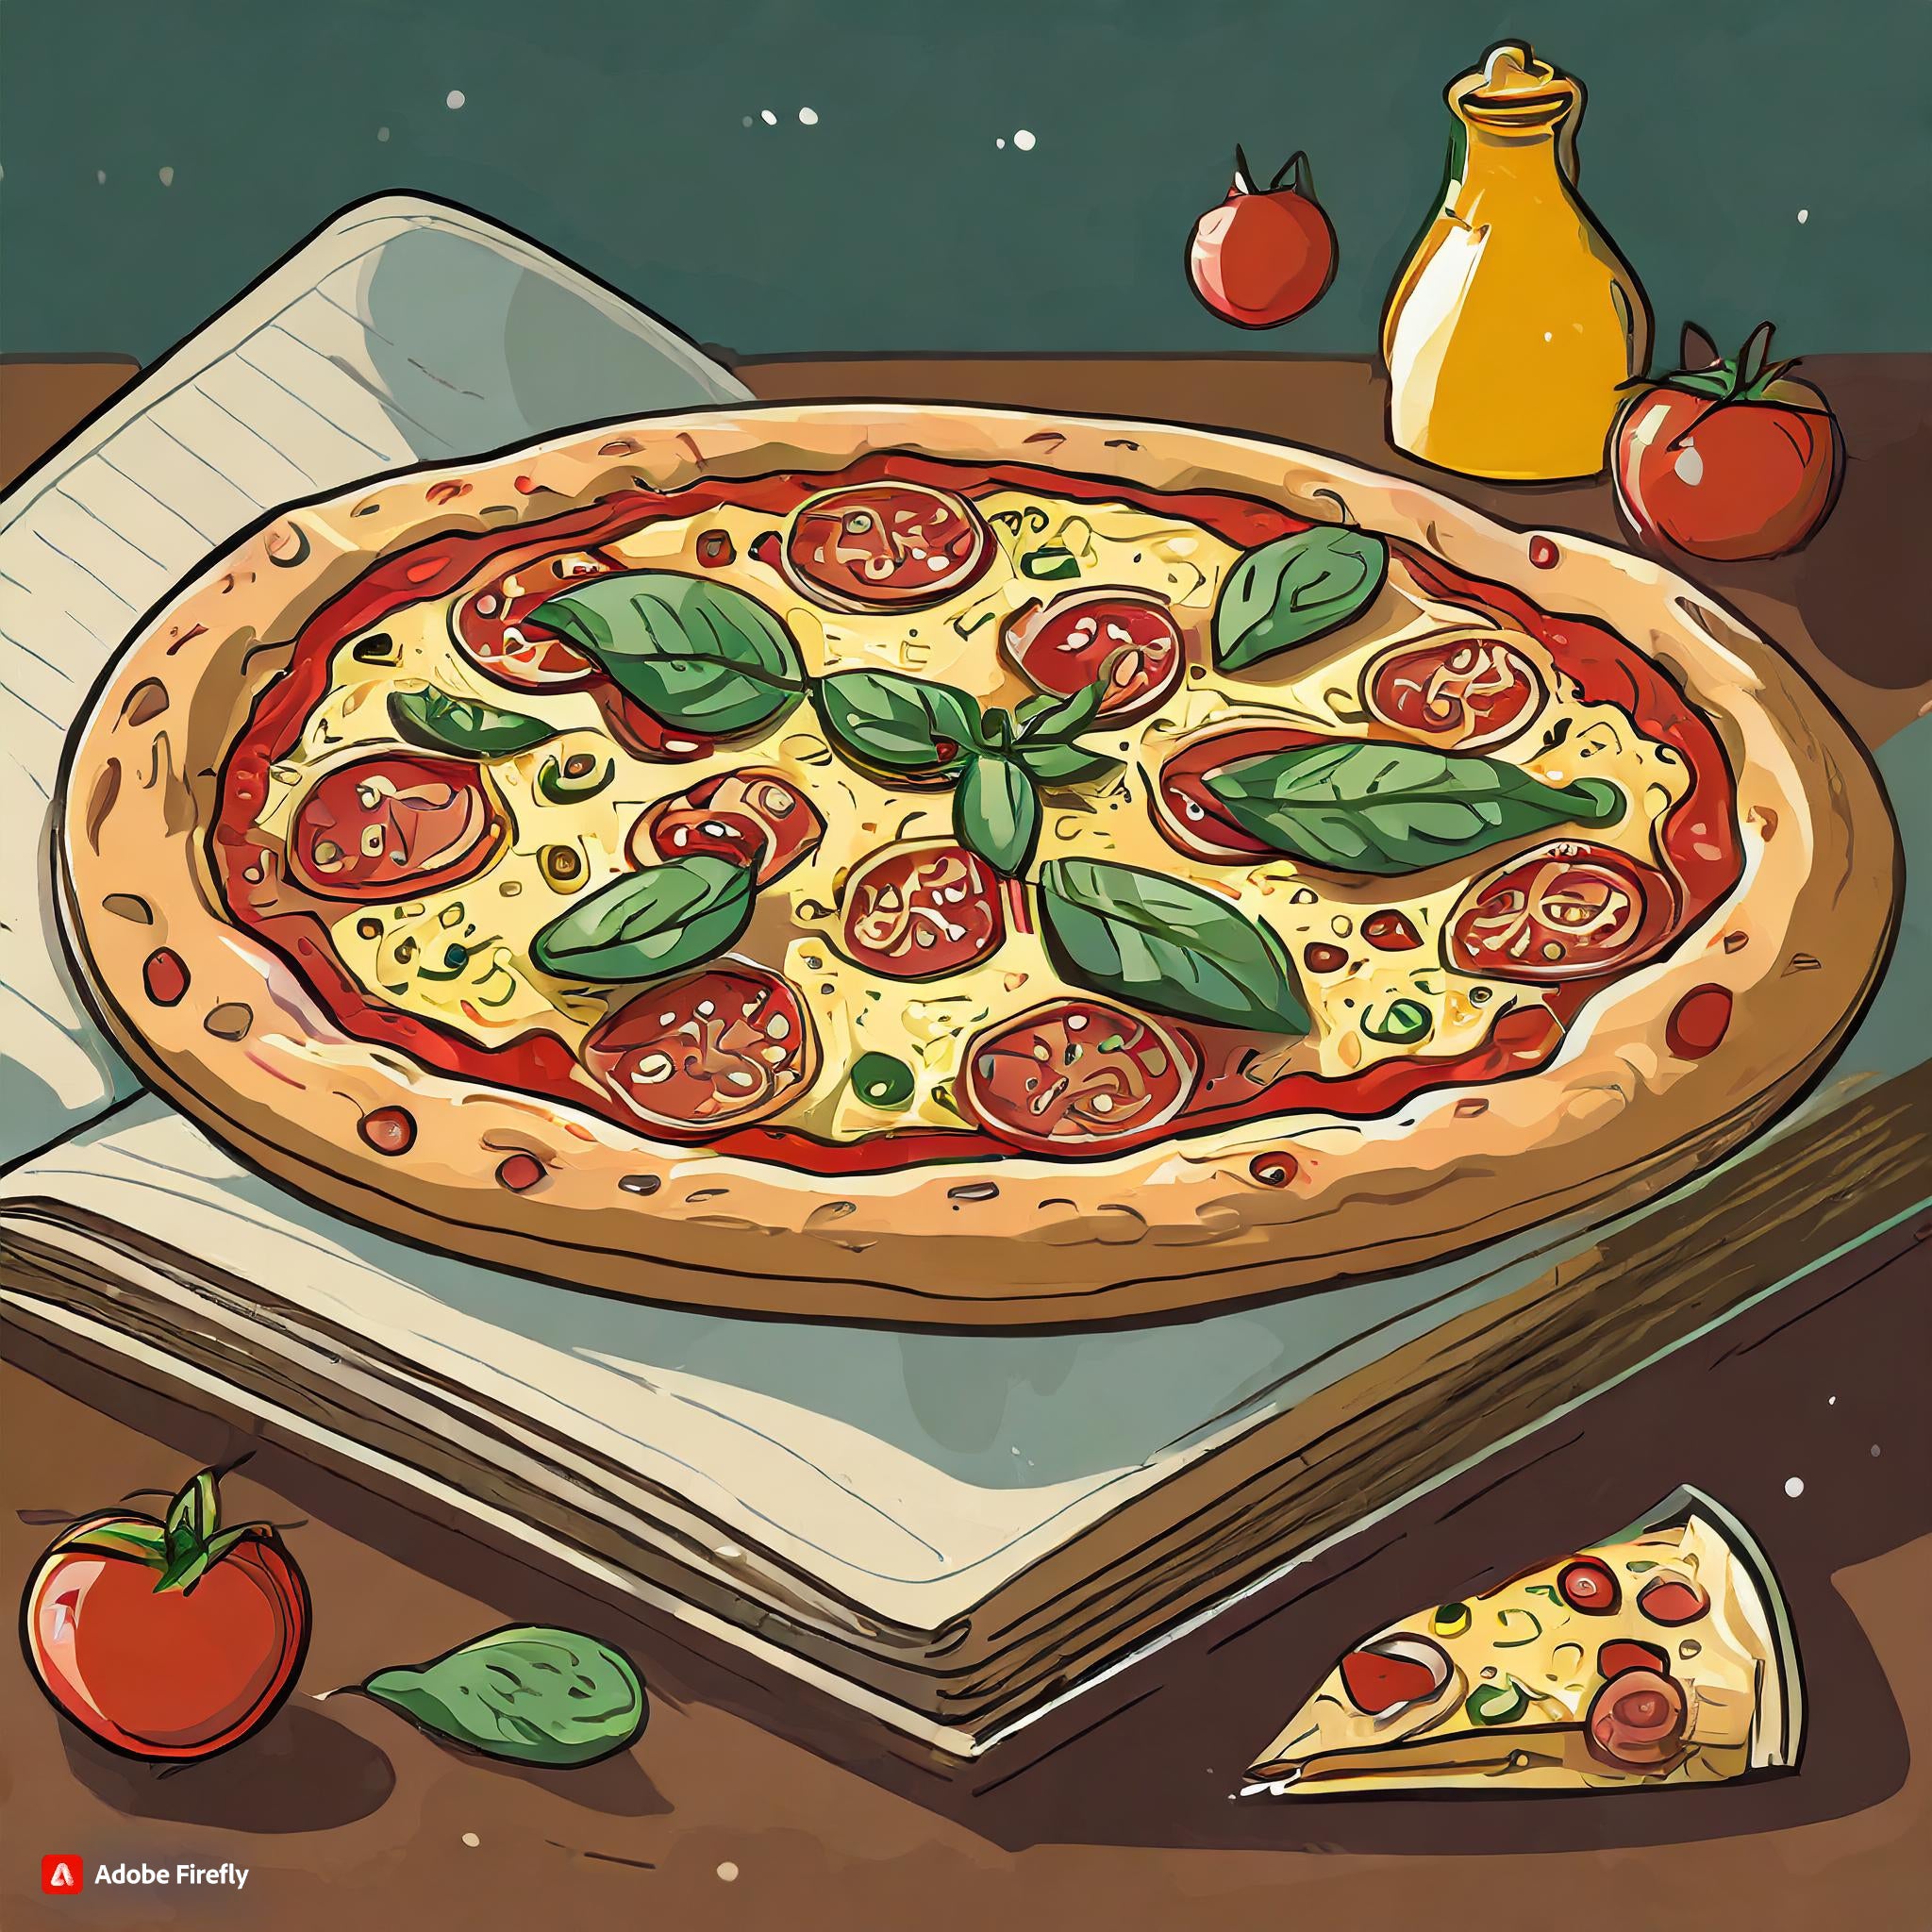 O imagine care arata o pizza desenata intr-un mod cartoonish, pe o carte si cu rosii prin imprejur.